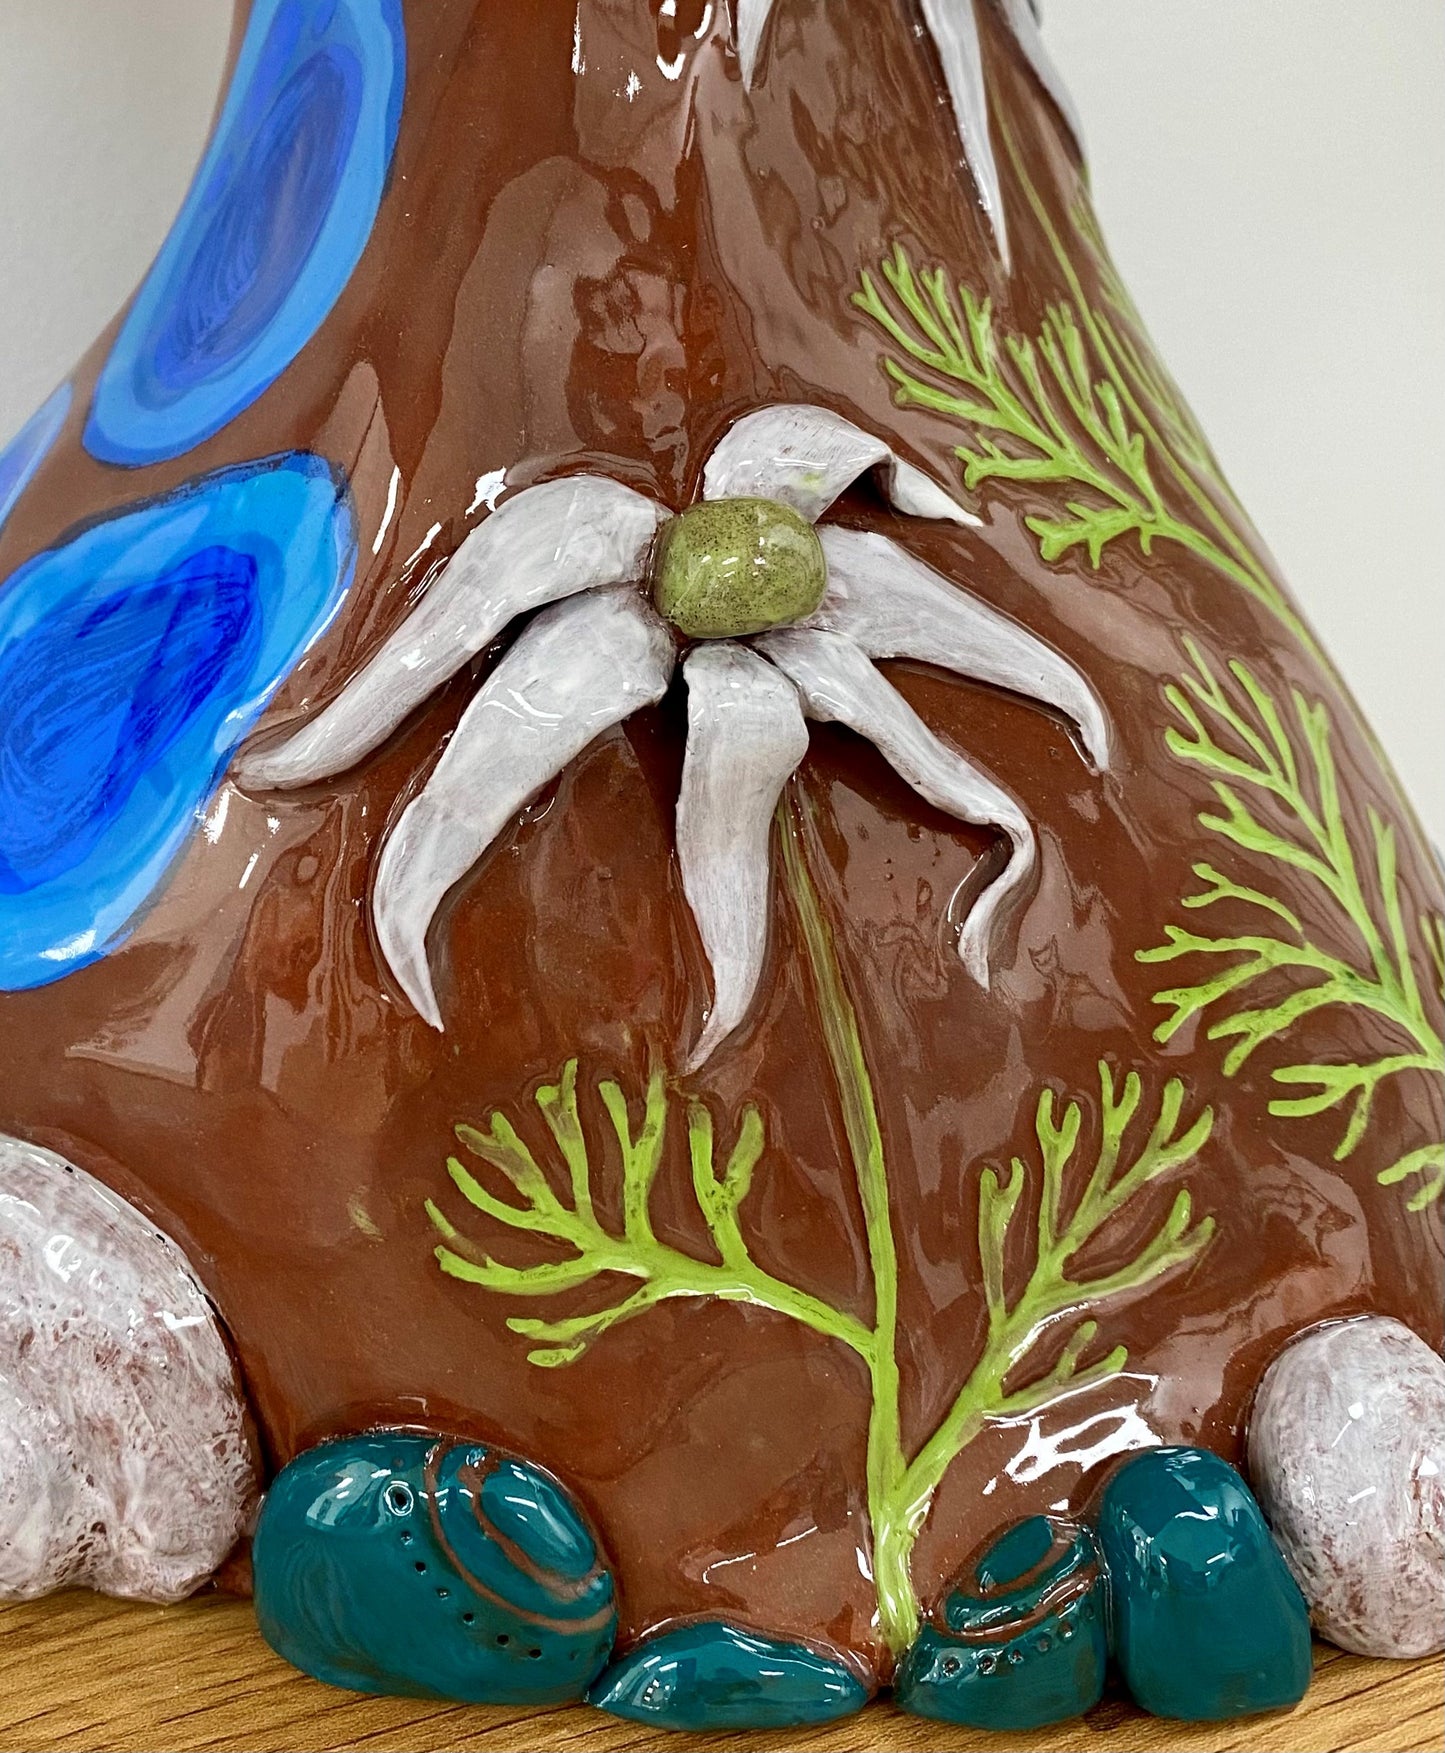 Dune - Ceramic Vase with Flowers & Shells